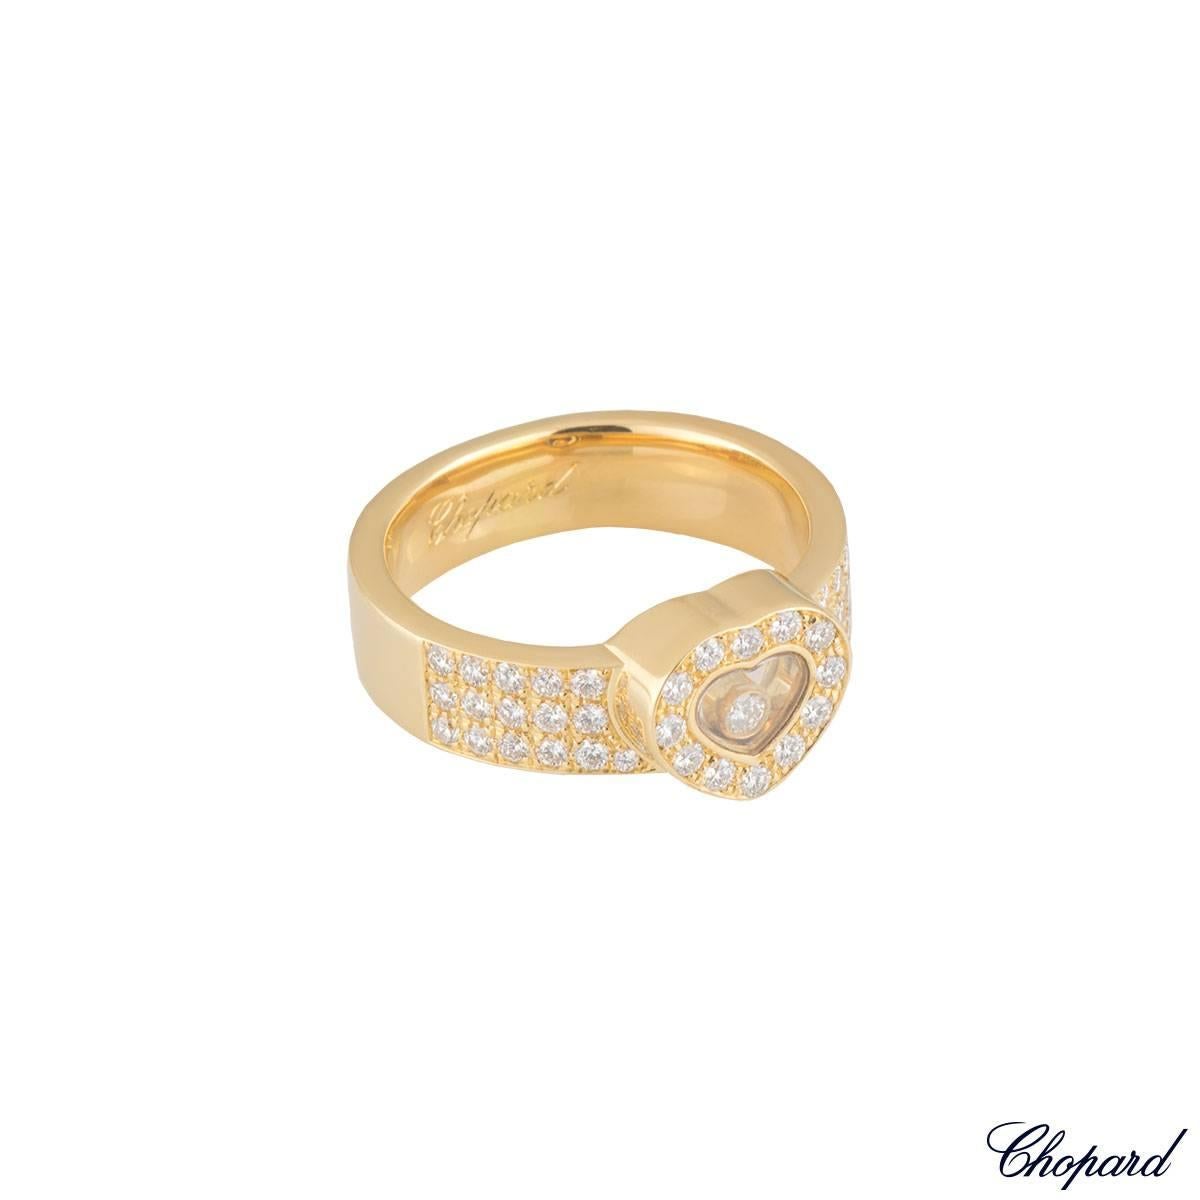 chopard floating diamond ring